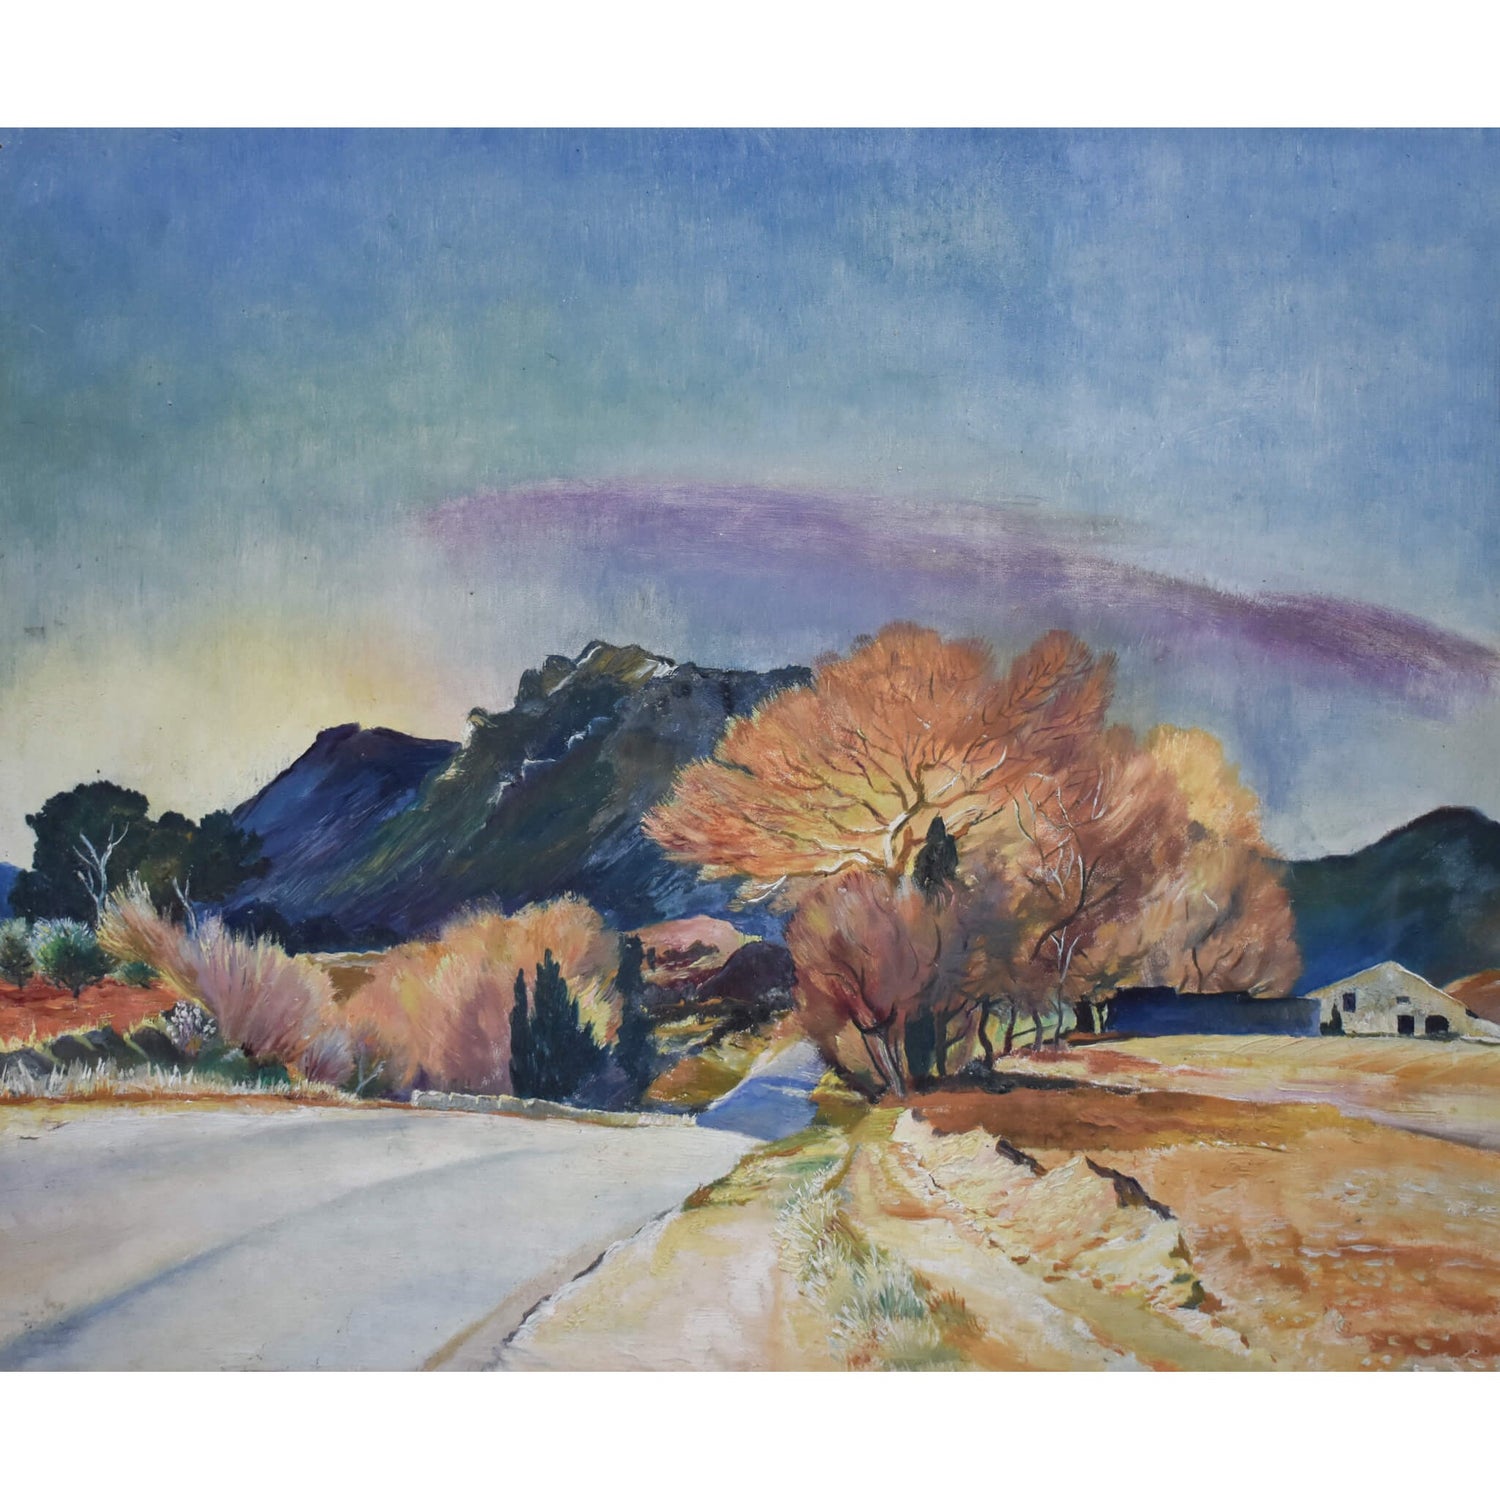 Vintage landscape oil painting Jura mountains view original 1951 by Sine Mackinnon for sale at Winckelmann Gallery